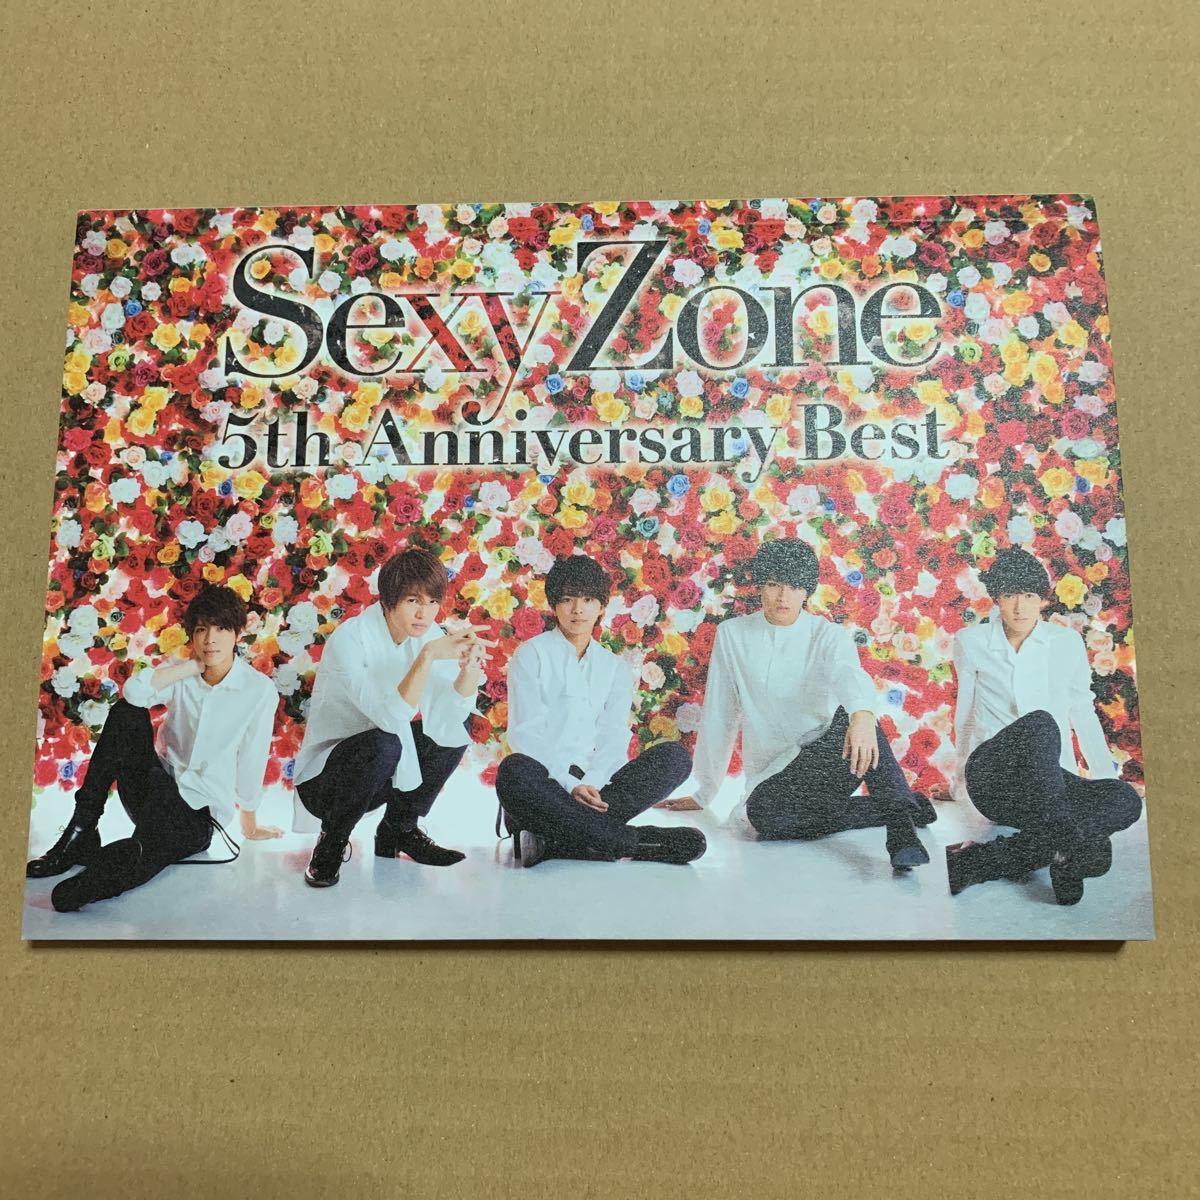 Sexy Zone 5th Anniversary Best 初回A DVD付き_画像1